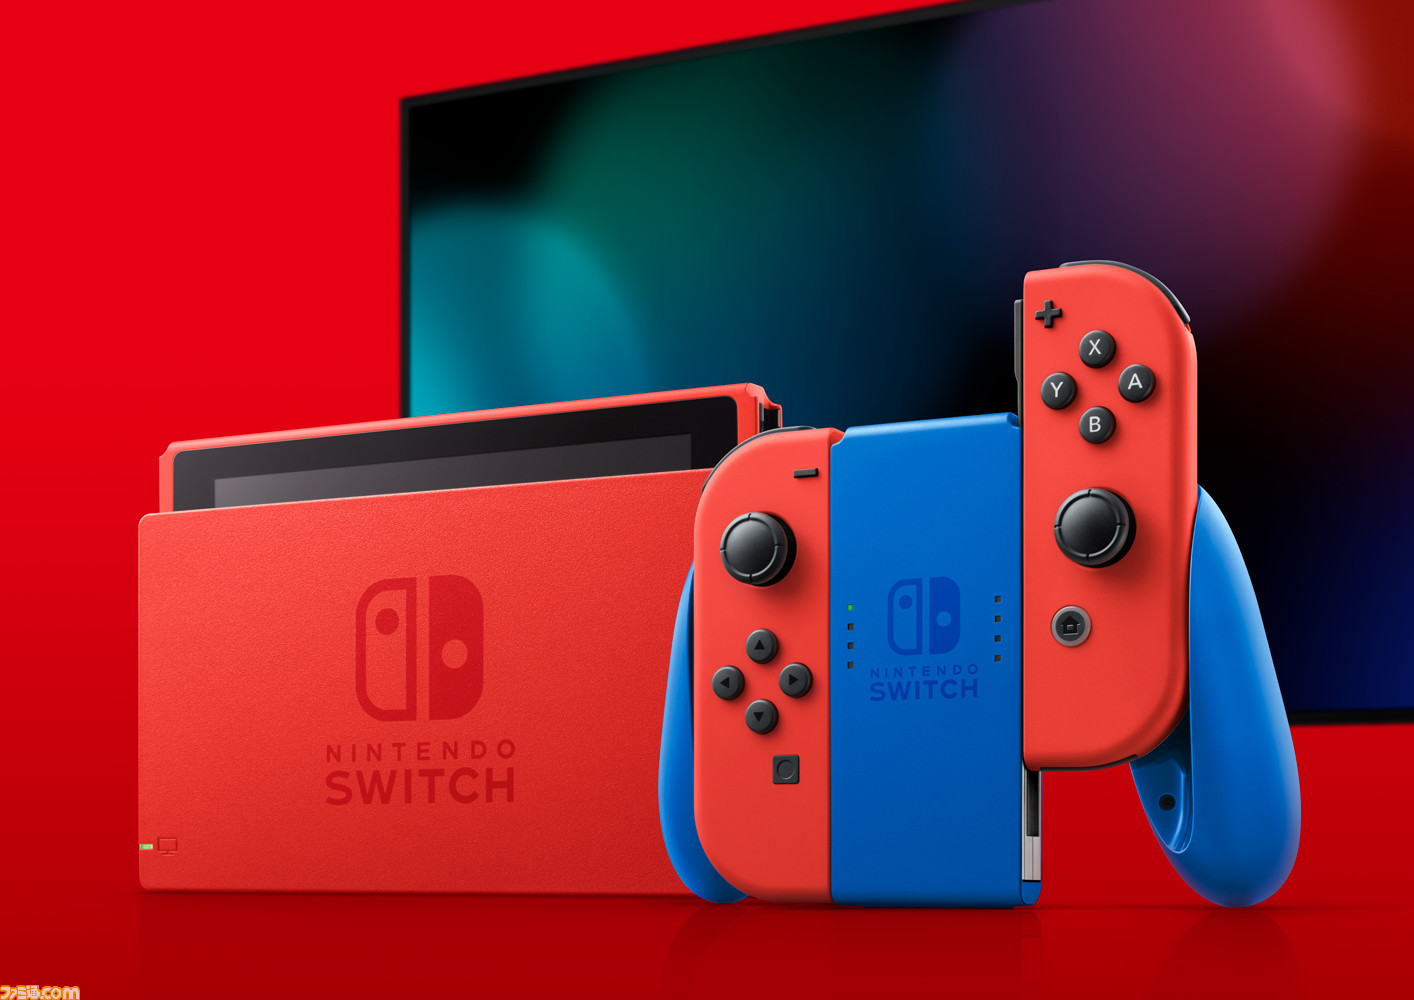 Nintendo Switch マリオレッド×ブルー セット | www.myglobaltax.com